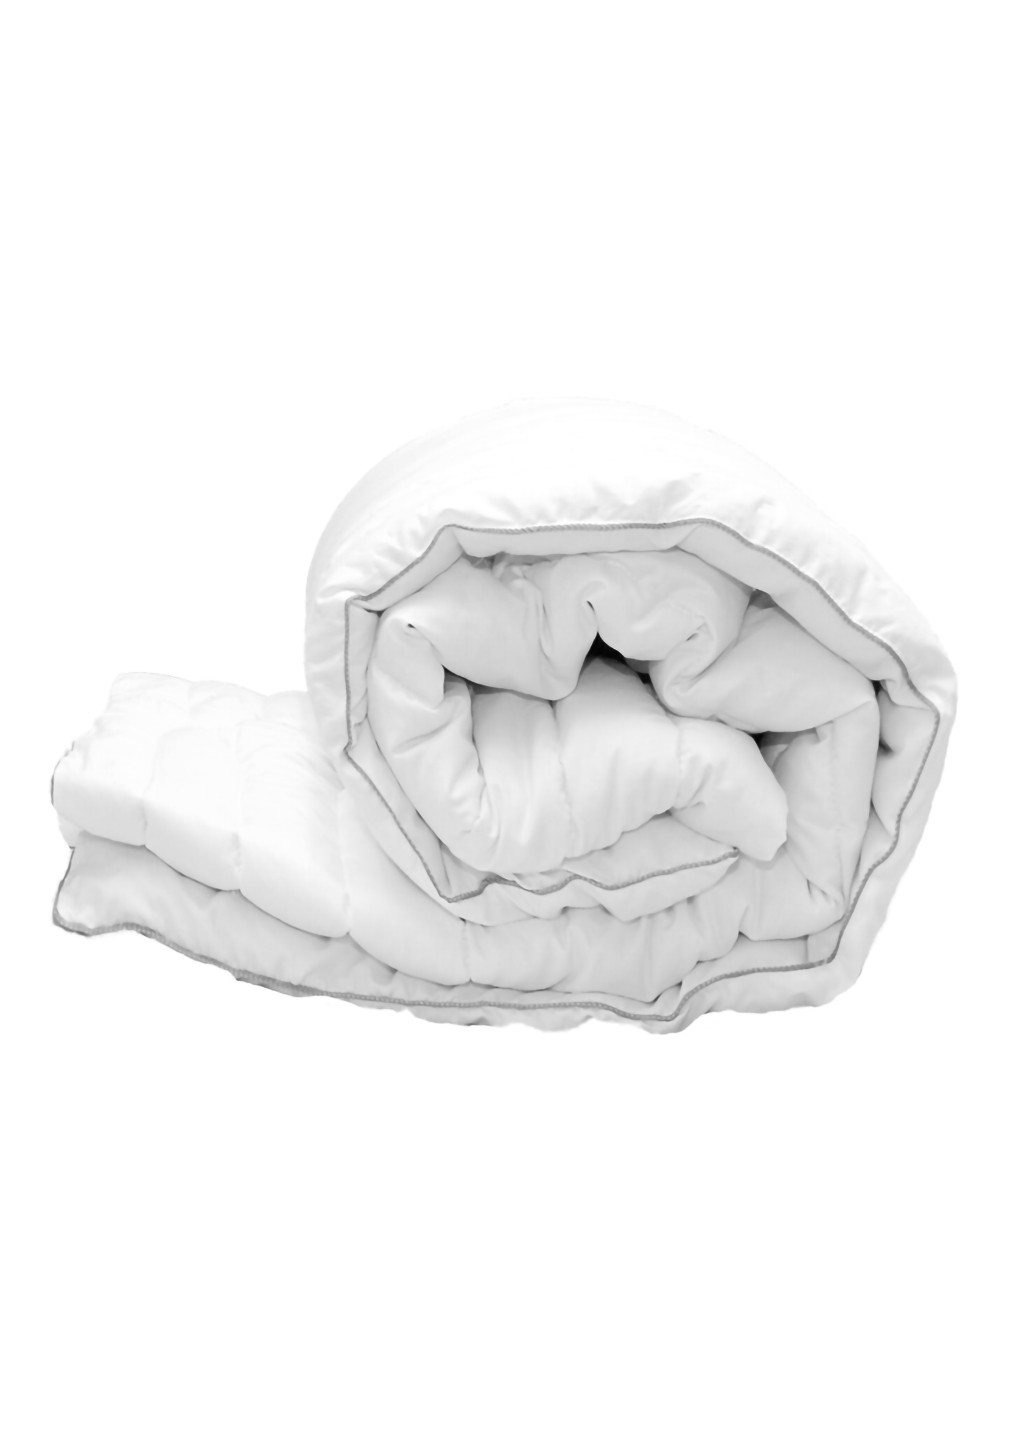 Одеяло лебяжий пух White 2-сп. Tag (254805544)